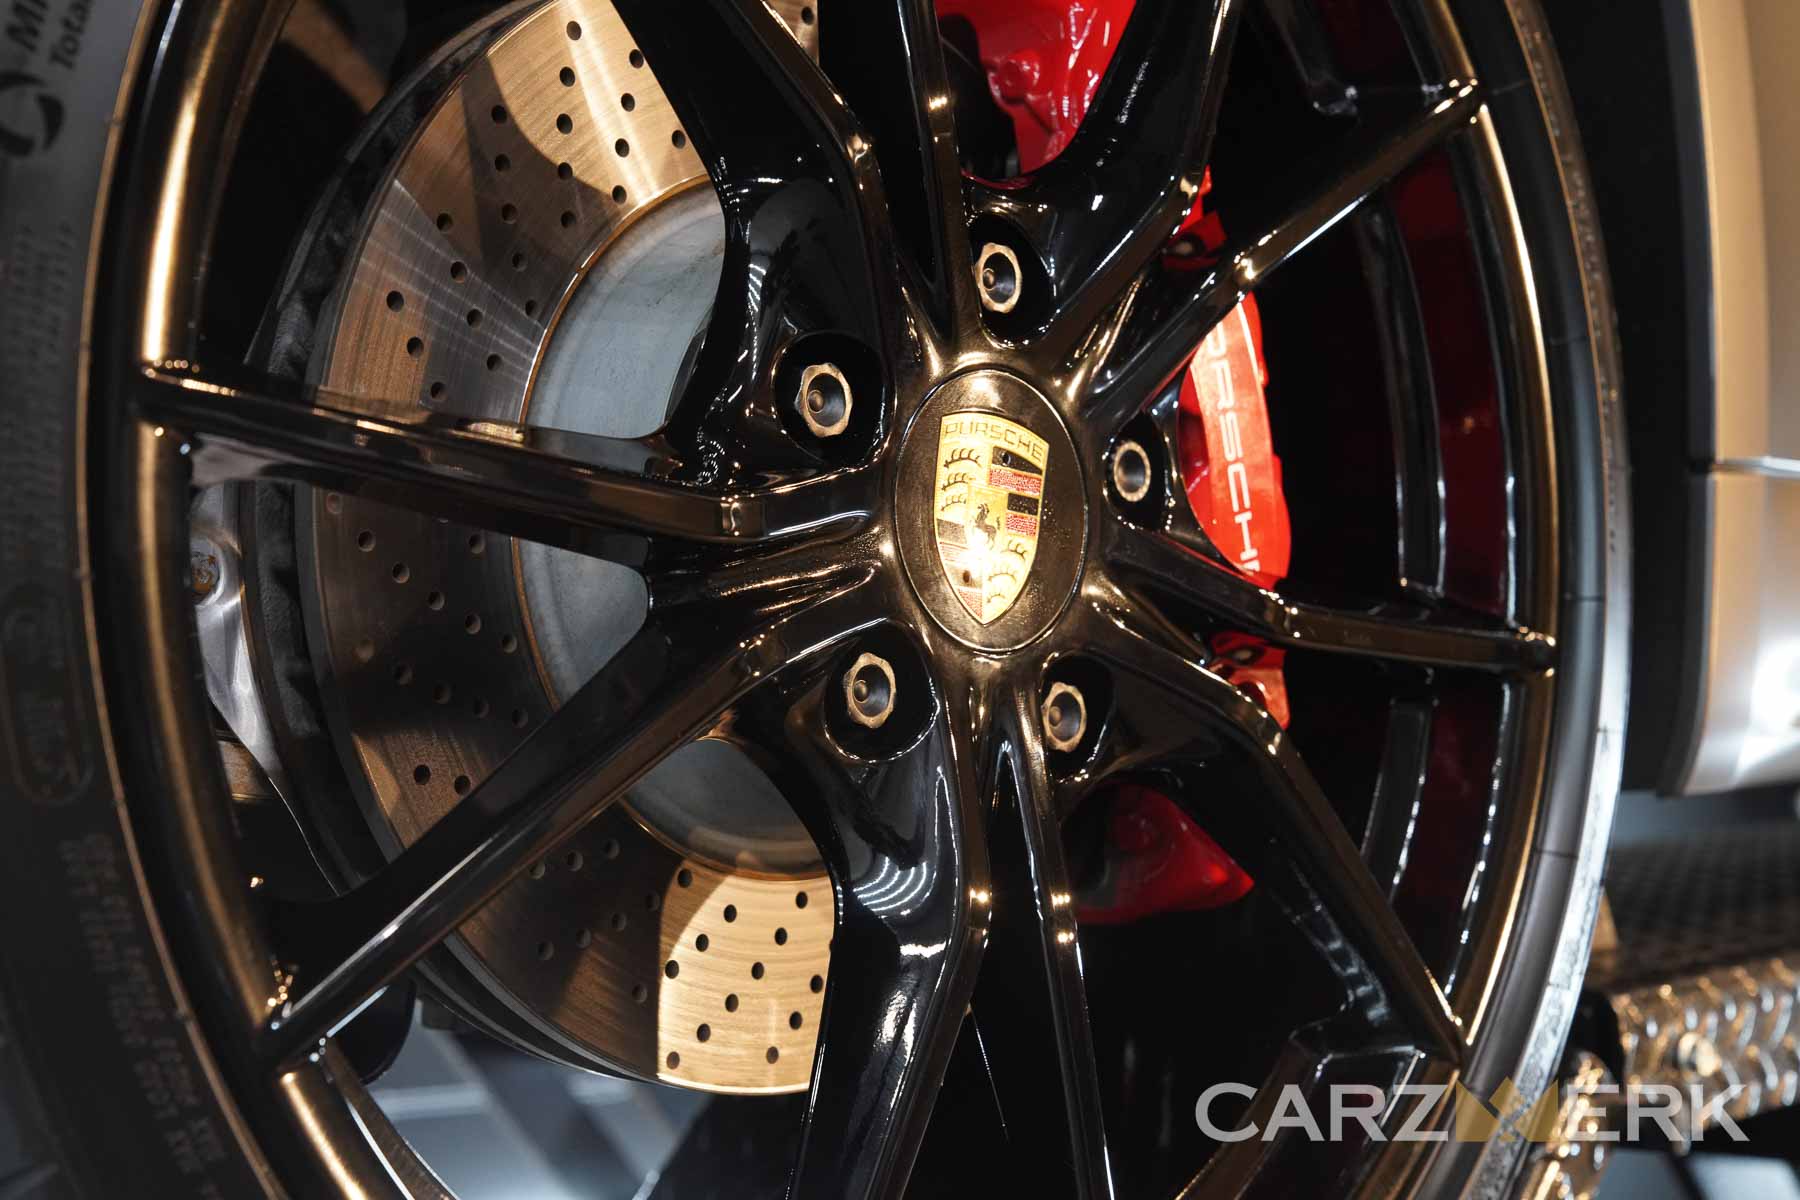 2020 Porsche Cayman S - Gloss black wheels after ceramic coating